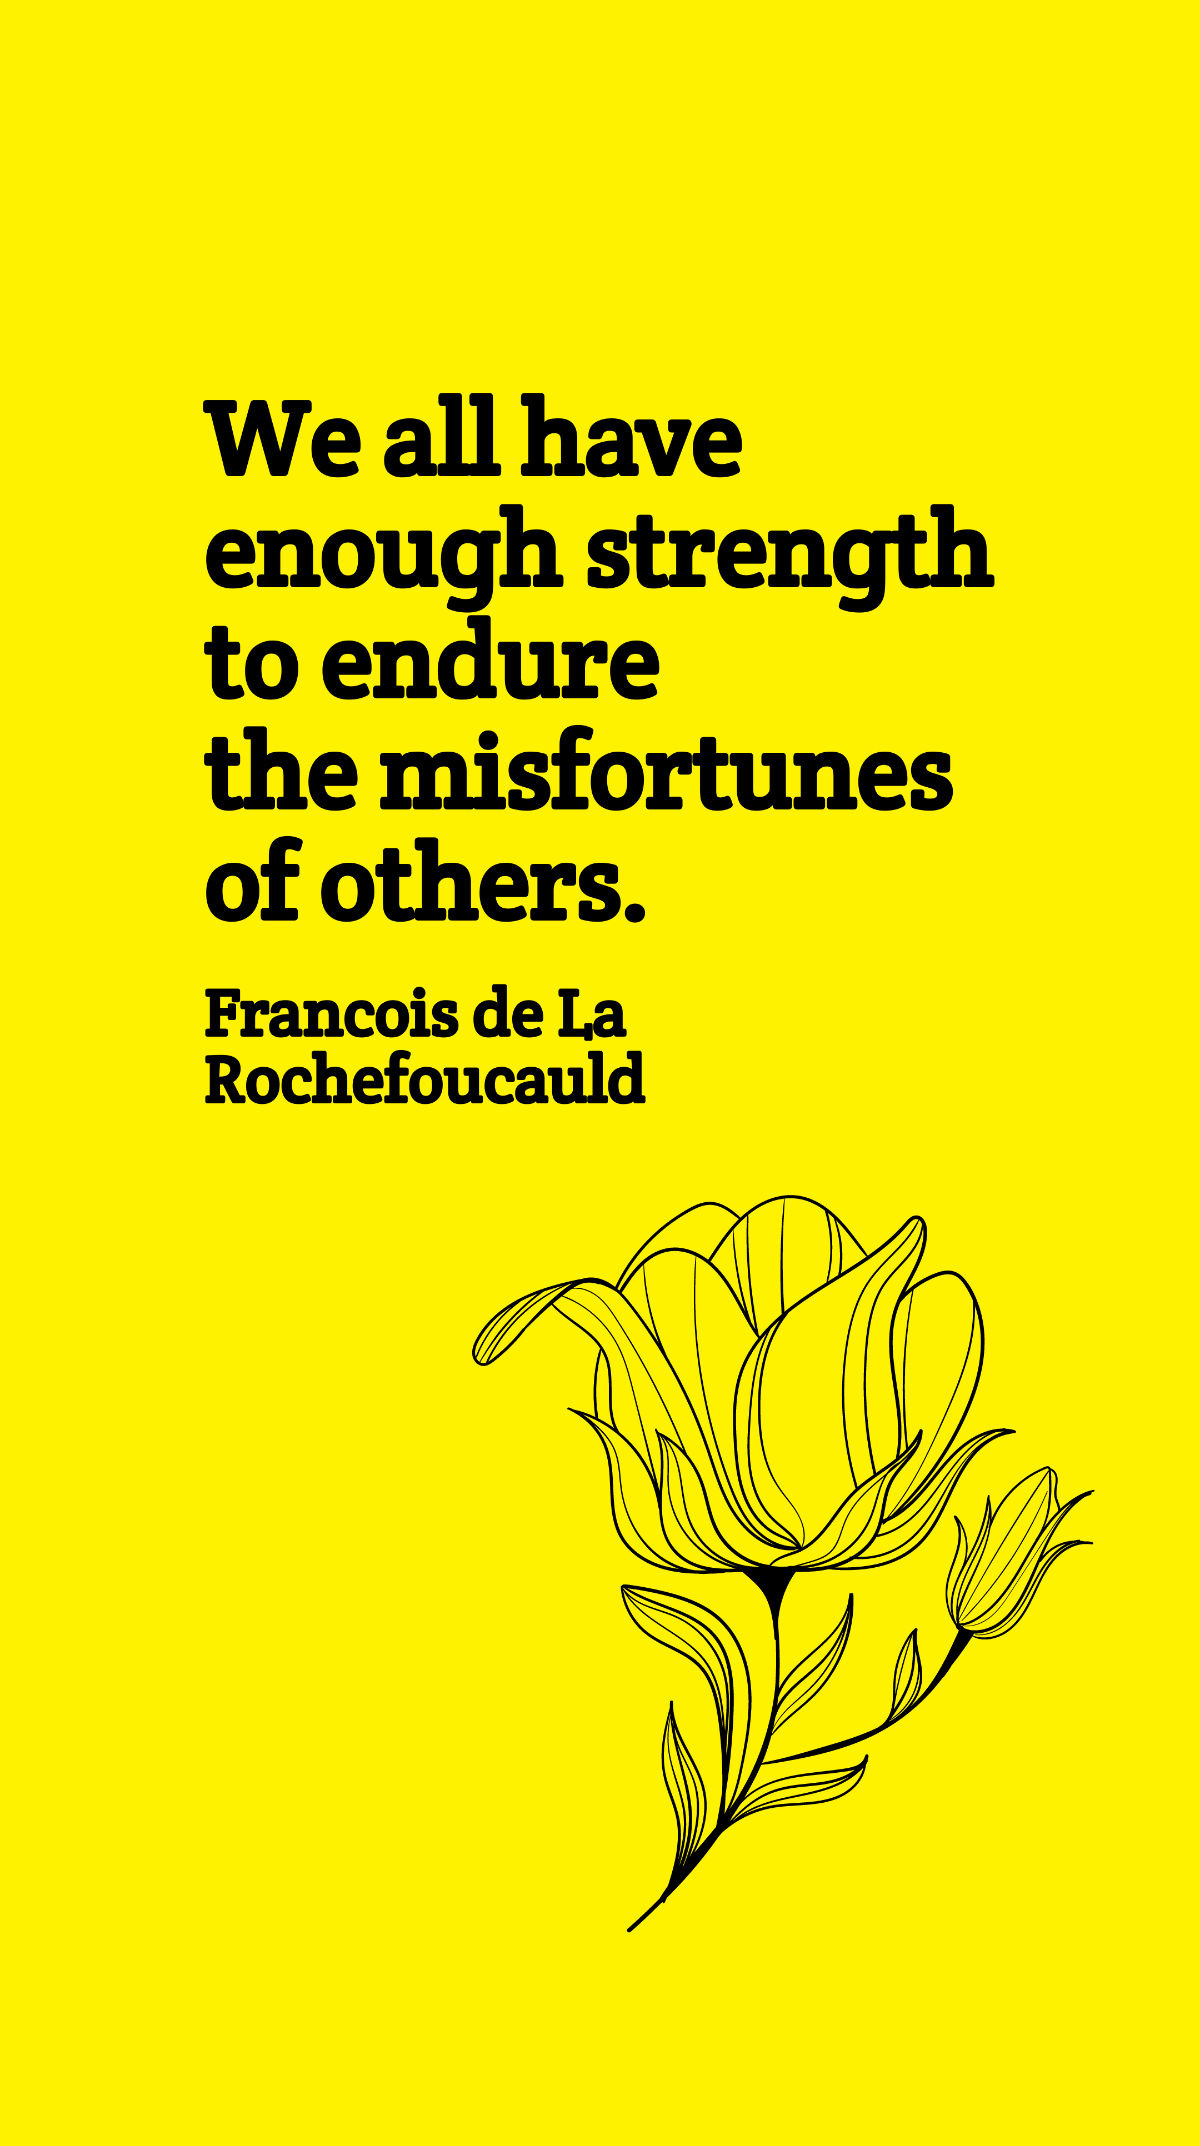 Francois de La Rochefoucauld - We all have enough strength to endure the misfortunes of others.